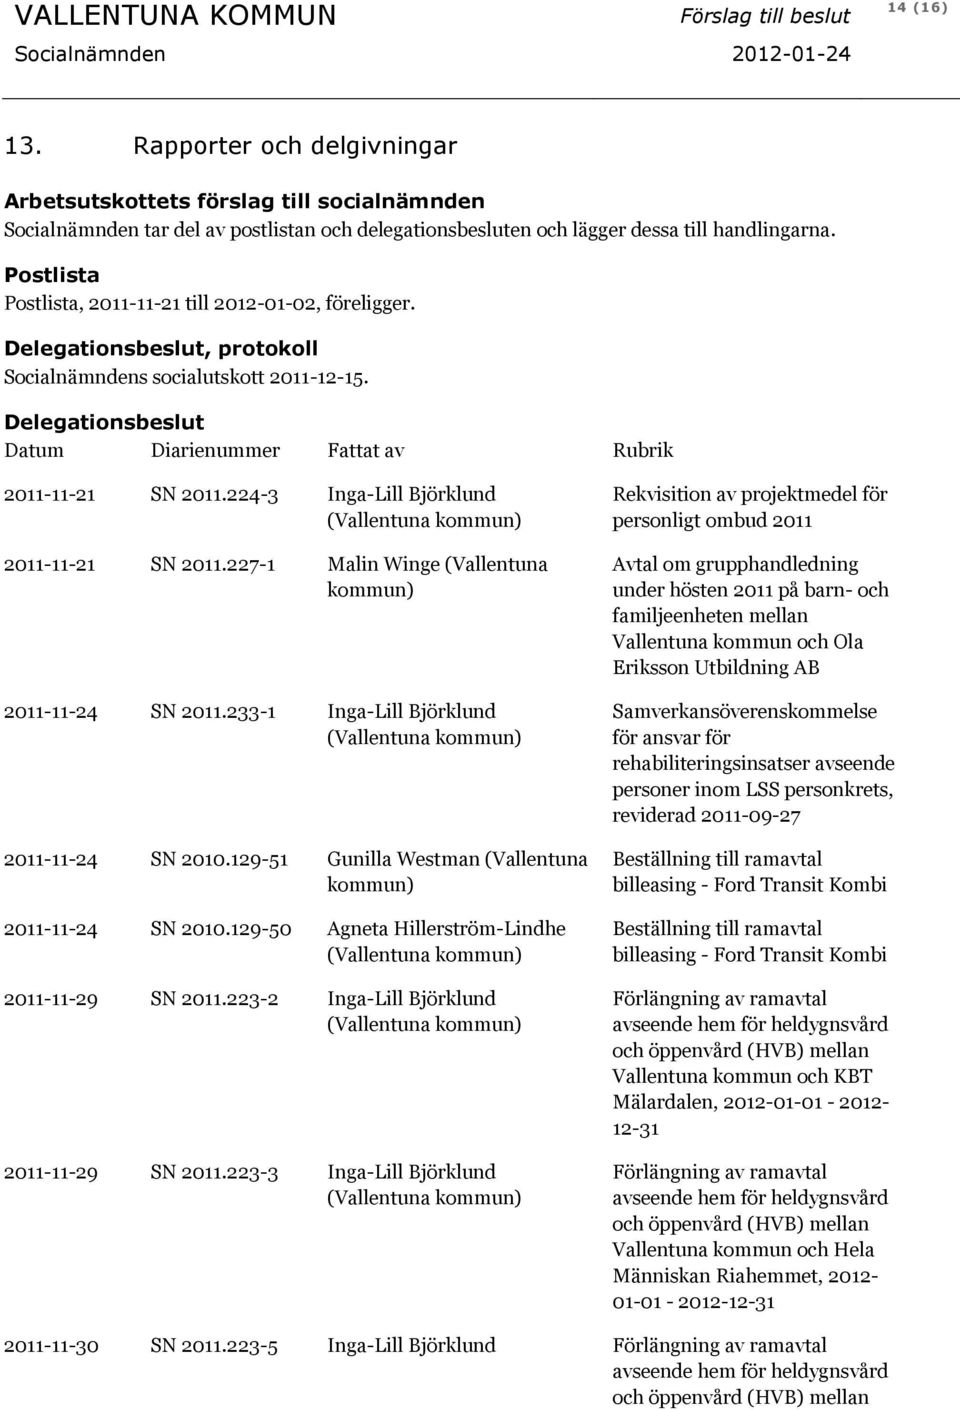 Delegationsbeslut Datum Diarienummer Fattat av Rubrik 2011-11-21 SN 2011.224-3 Inga-Lill Björklund 2011-11-21 SN 2011.227-1 Malin Winge (Vallentuna kommun) 2011-11-24 SN 2011.